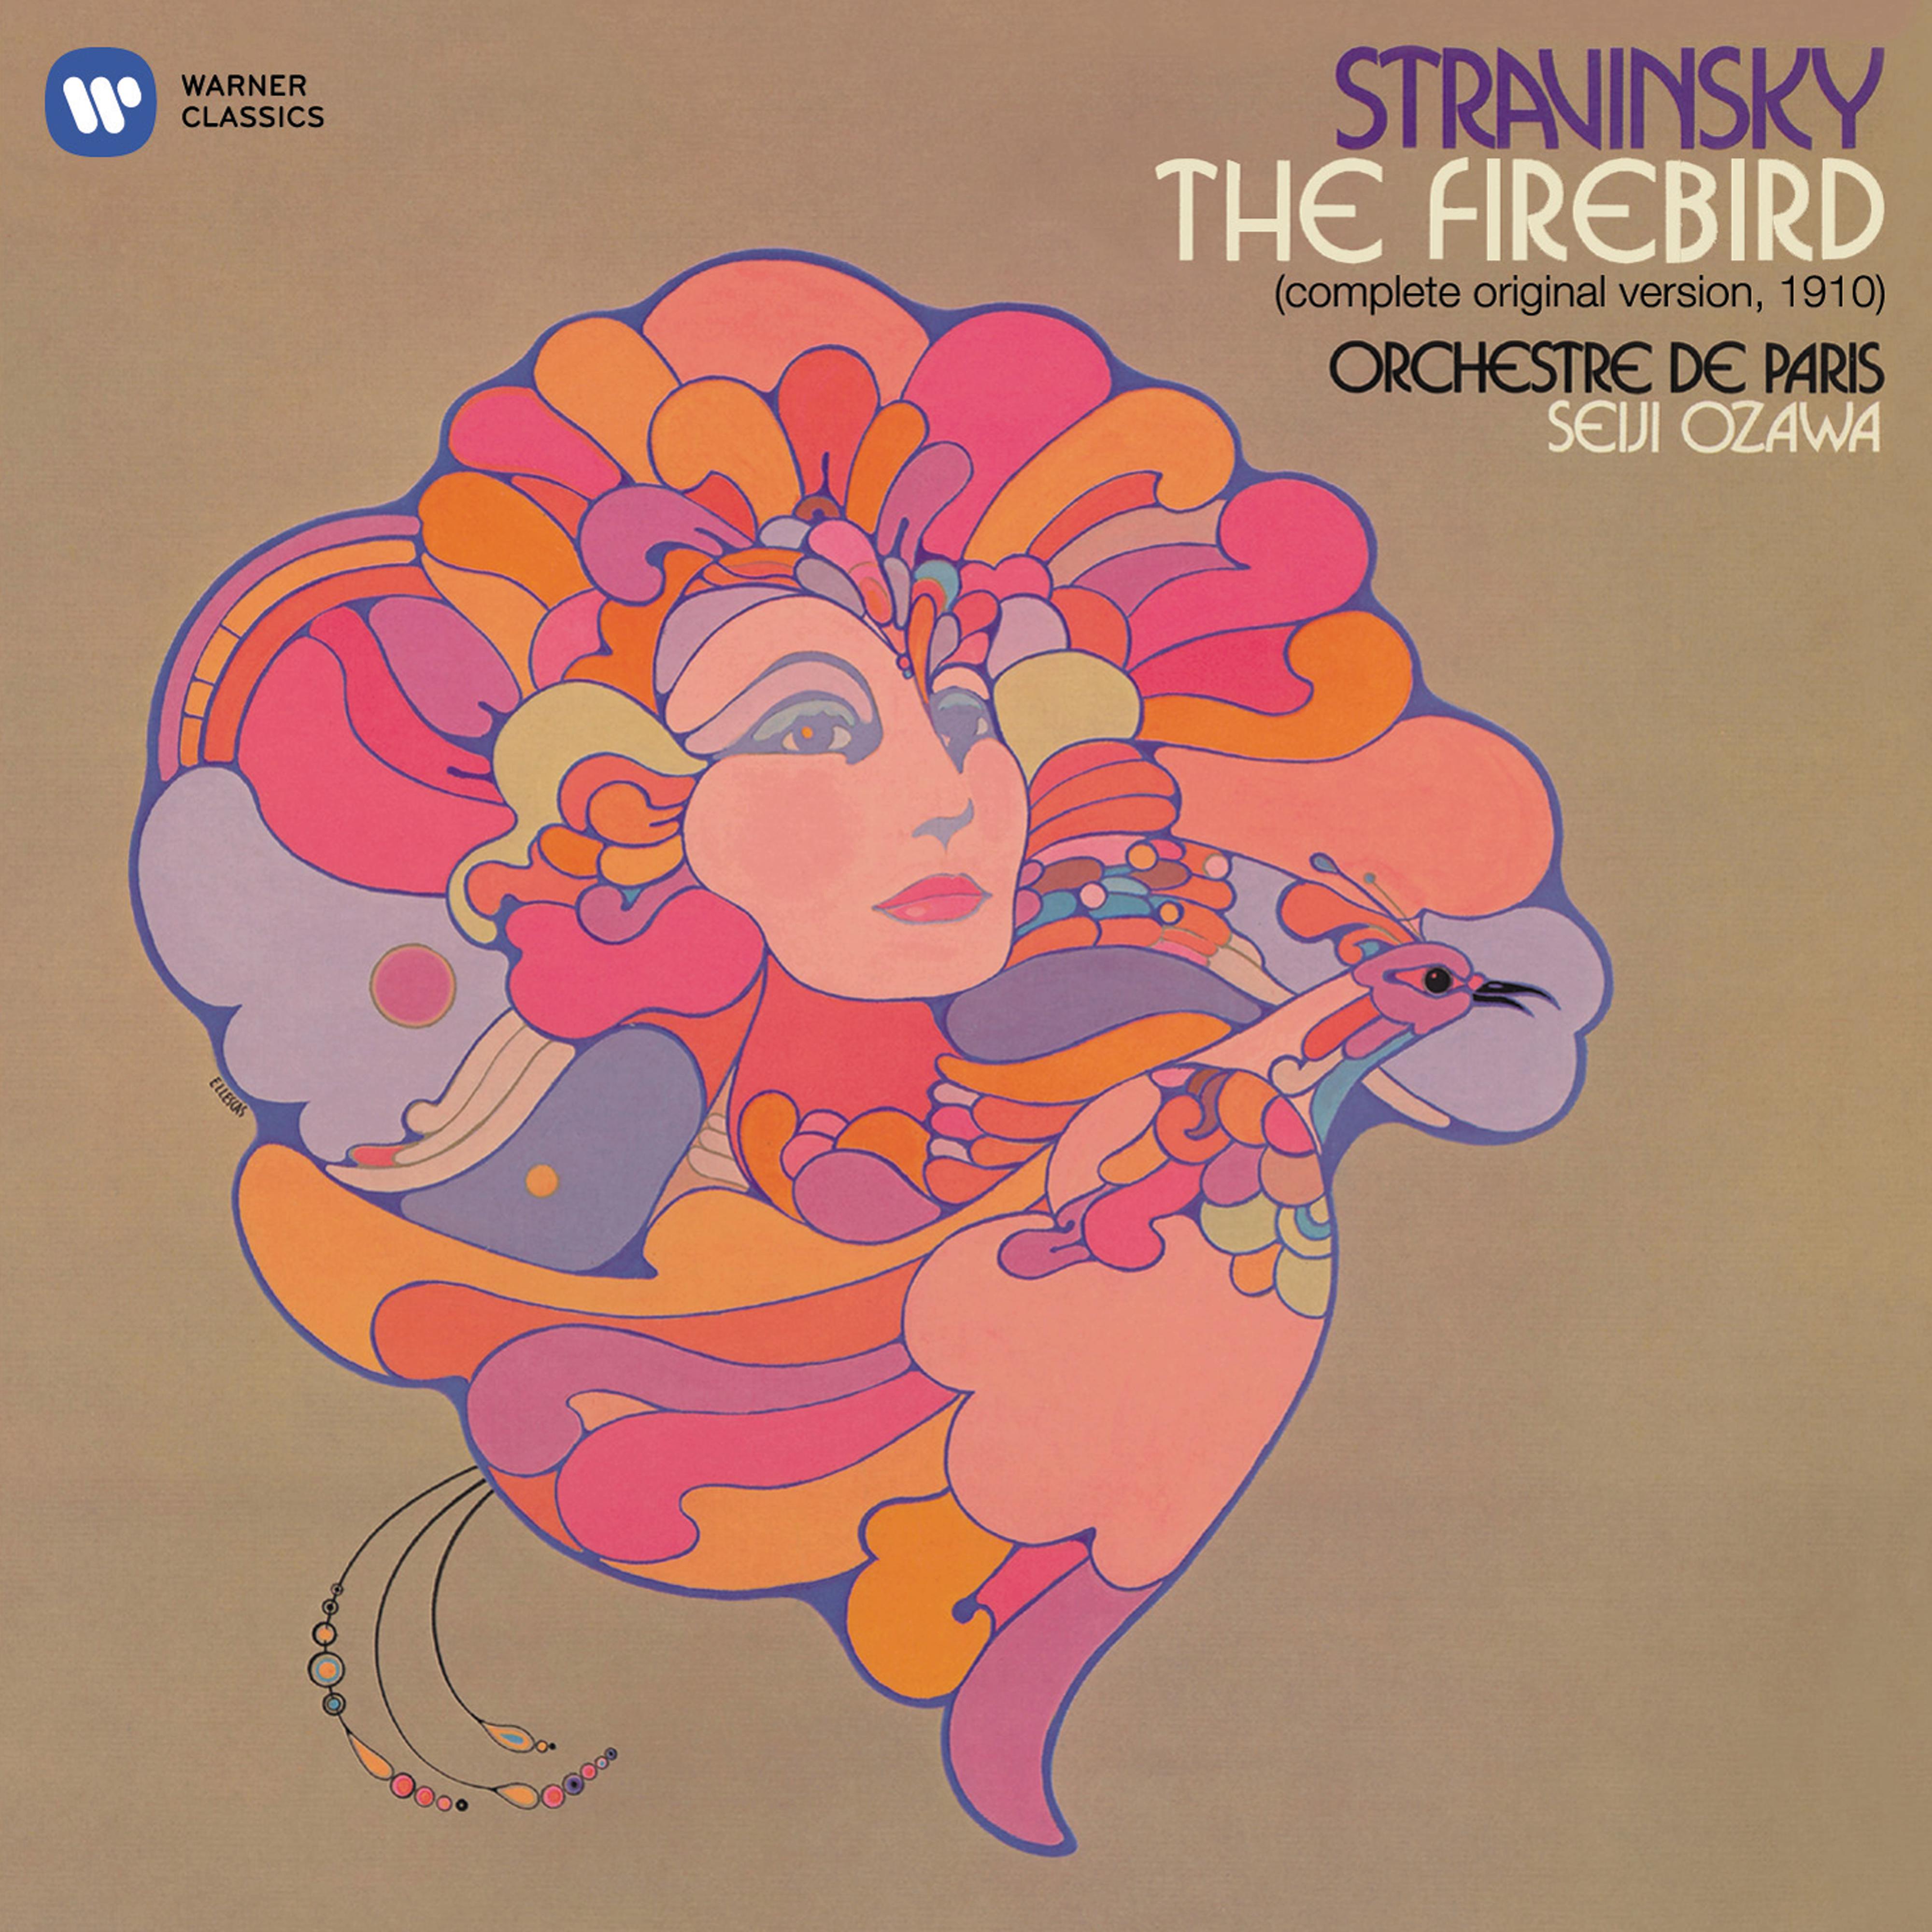 The Firebird, Tableau 1:Appearance of the Firebird Pursued by Ivan